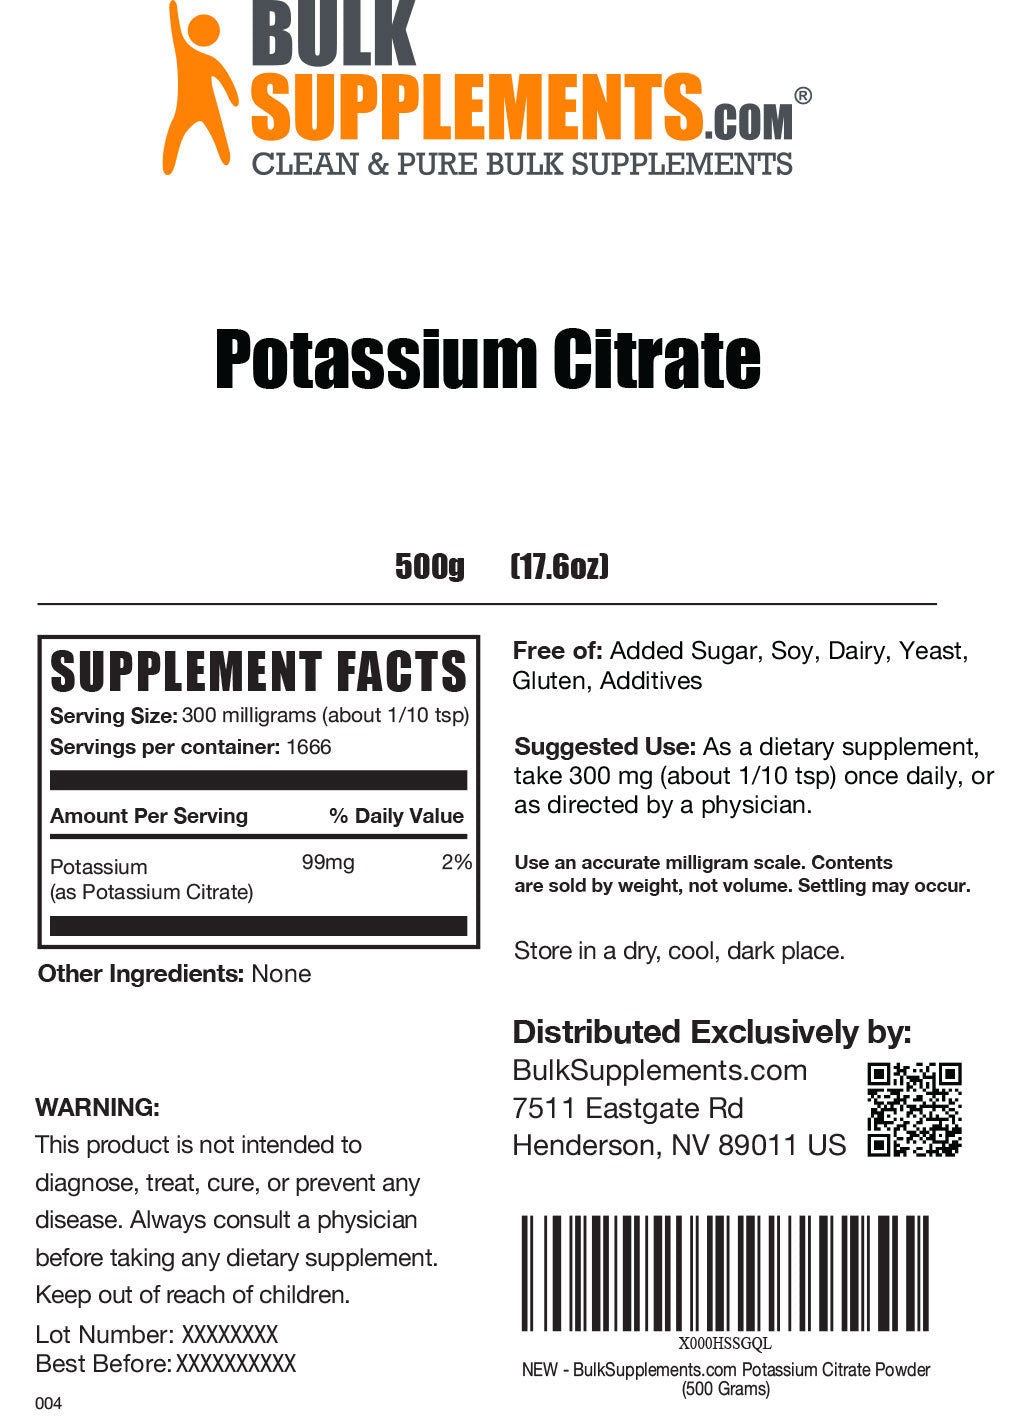 Potassium citrate powder label 500g